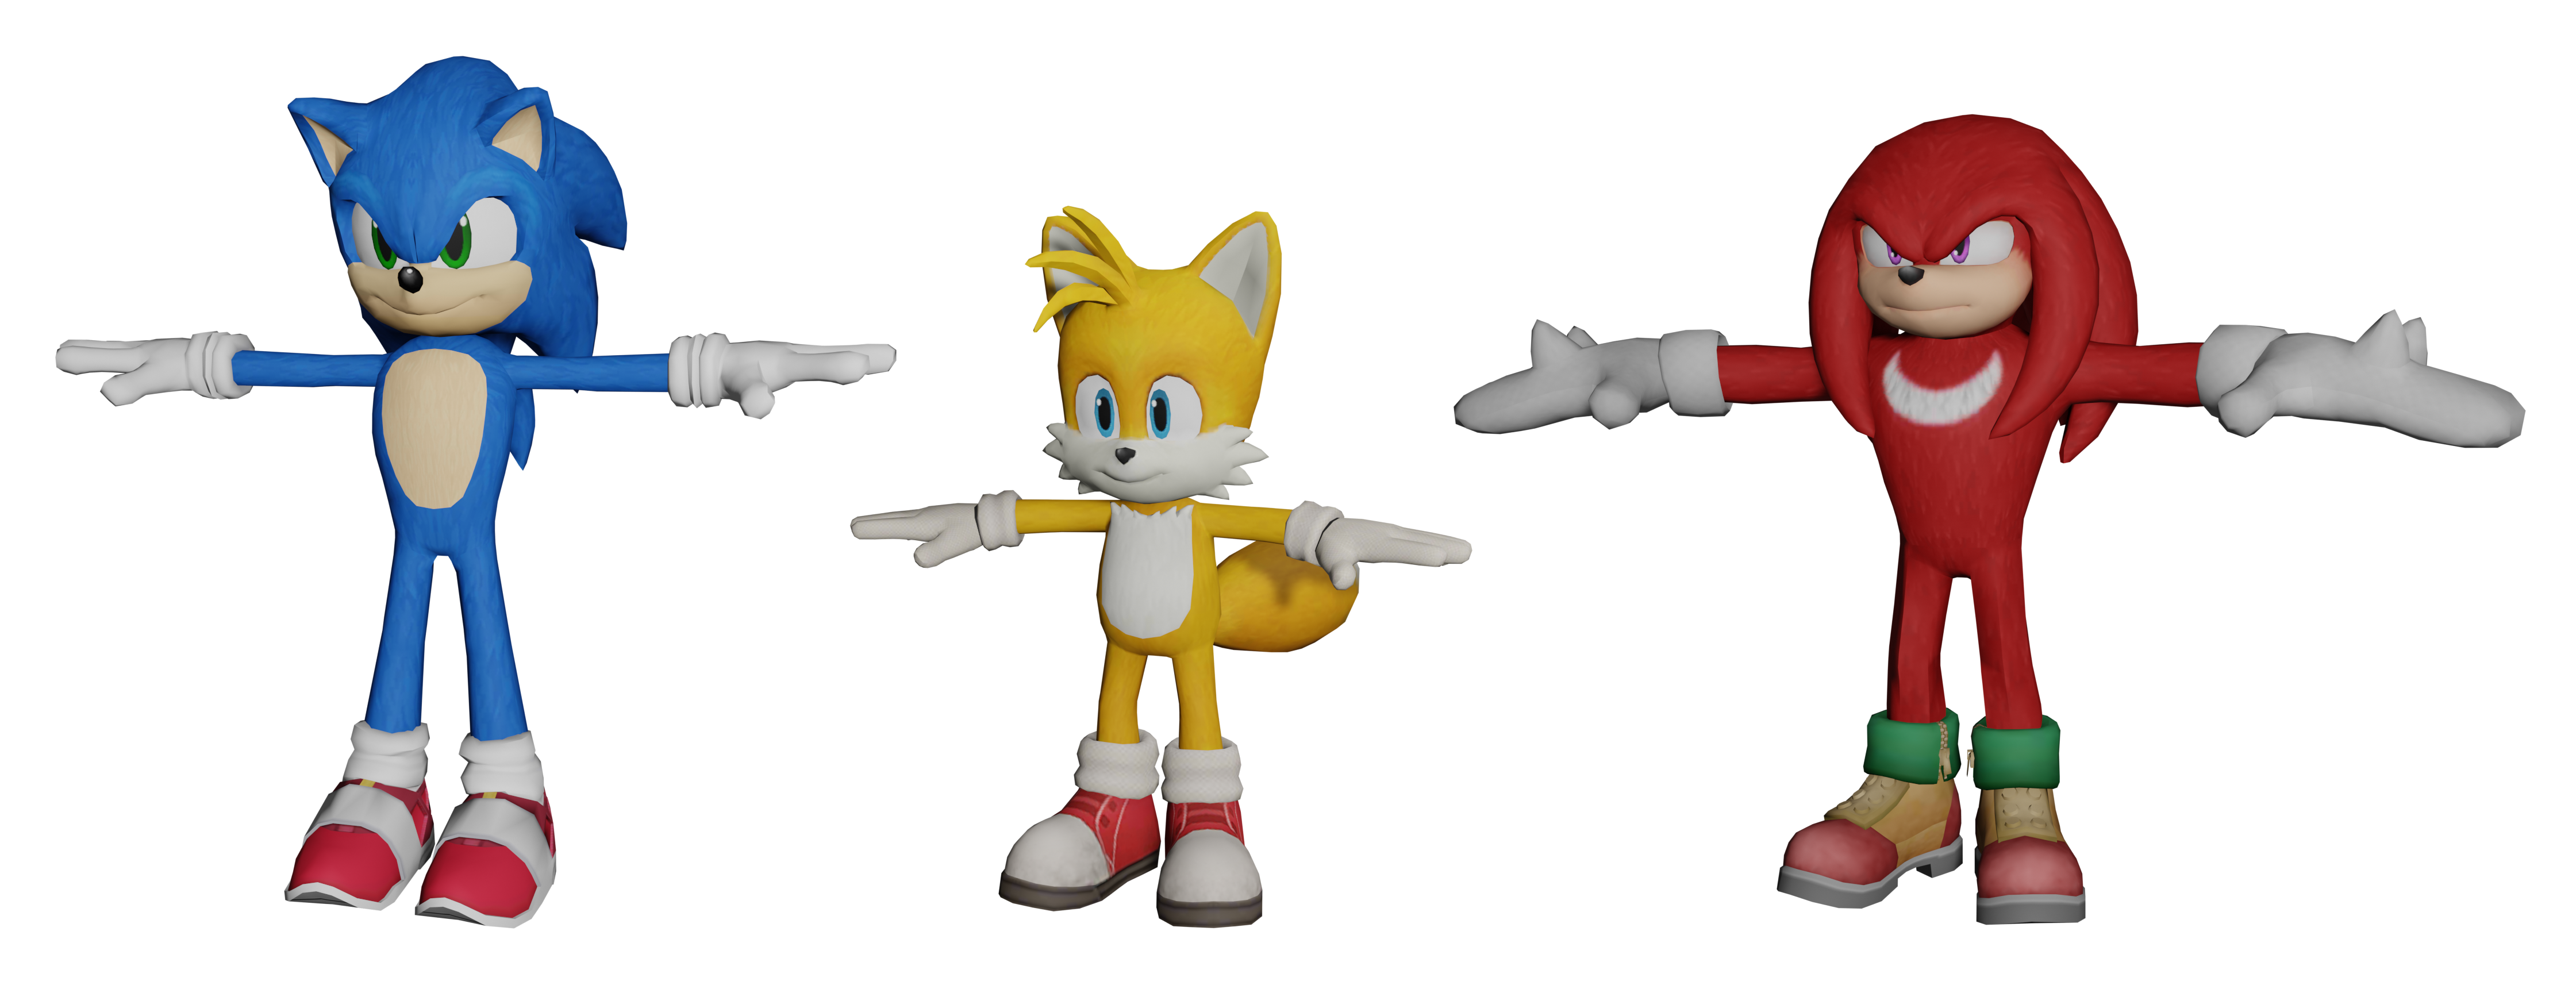 3D Model Download+ Sonic The Hedgehog by JCThornton on DeviantArt